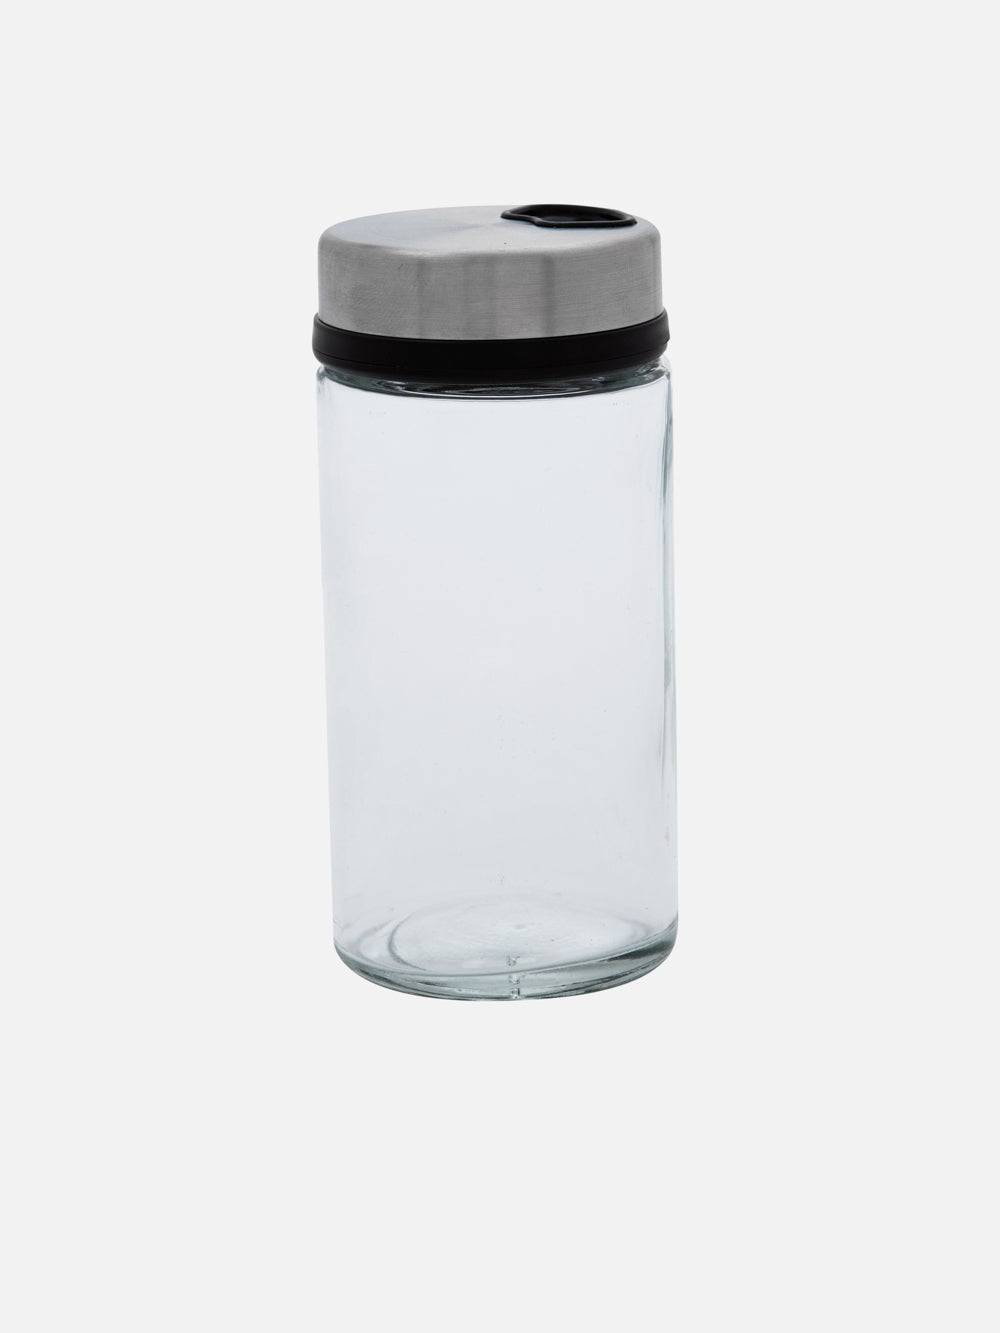 Medium Spice Jar